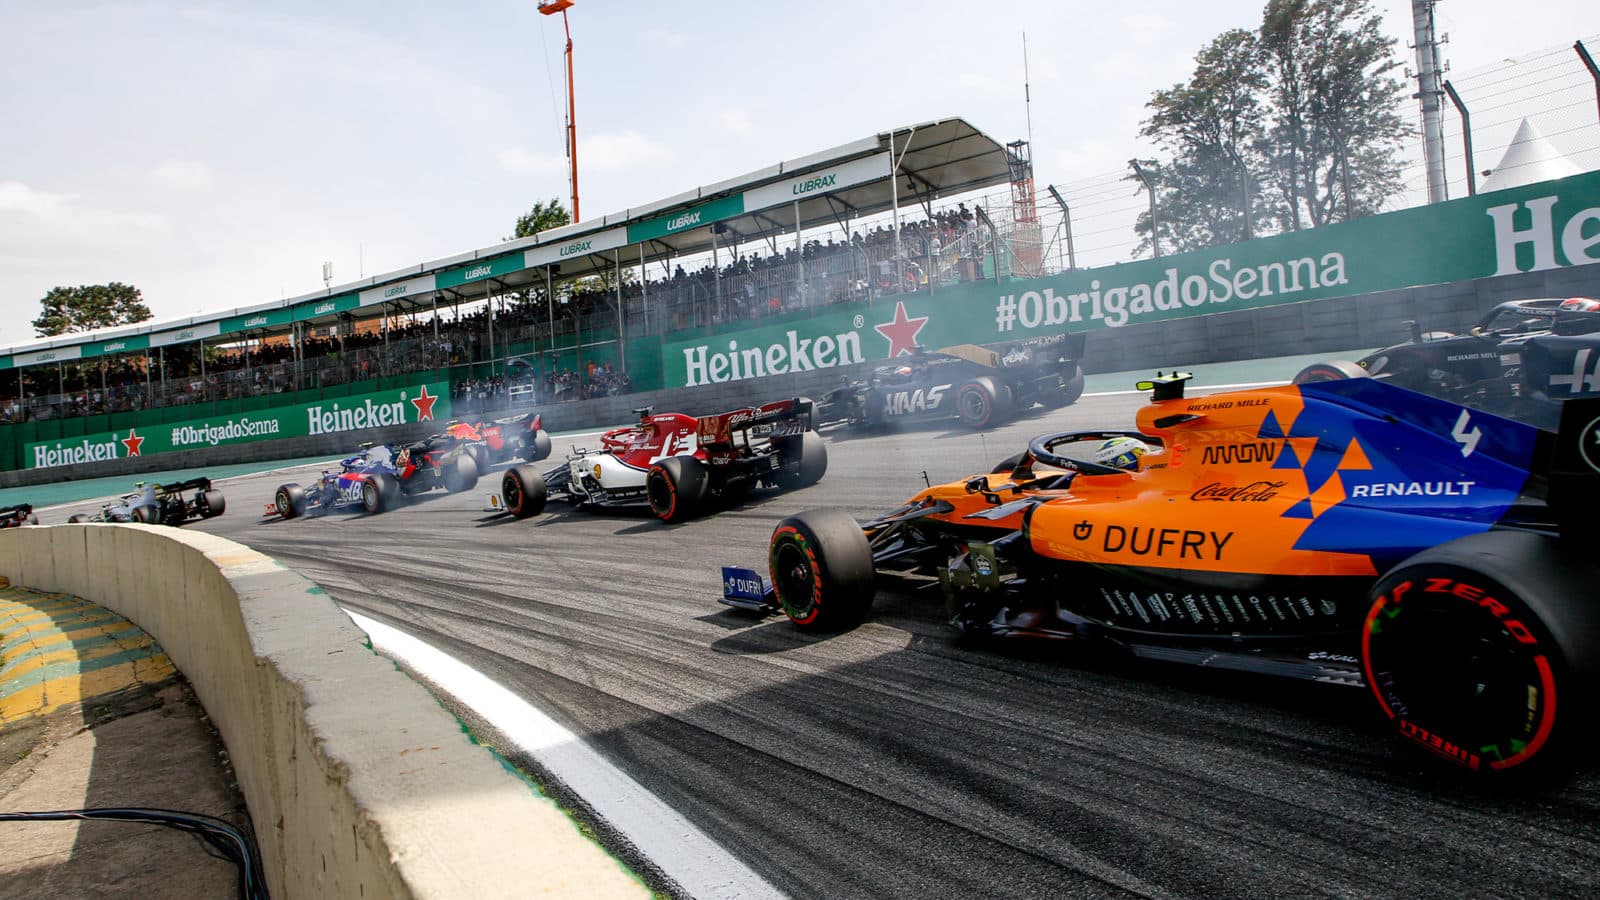 Cars head to Turn 1 at interlagos in the 2019 Brazilian Grand Prix